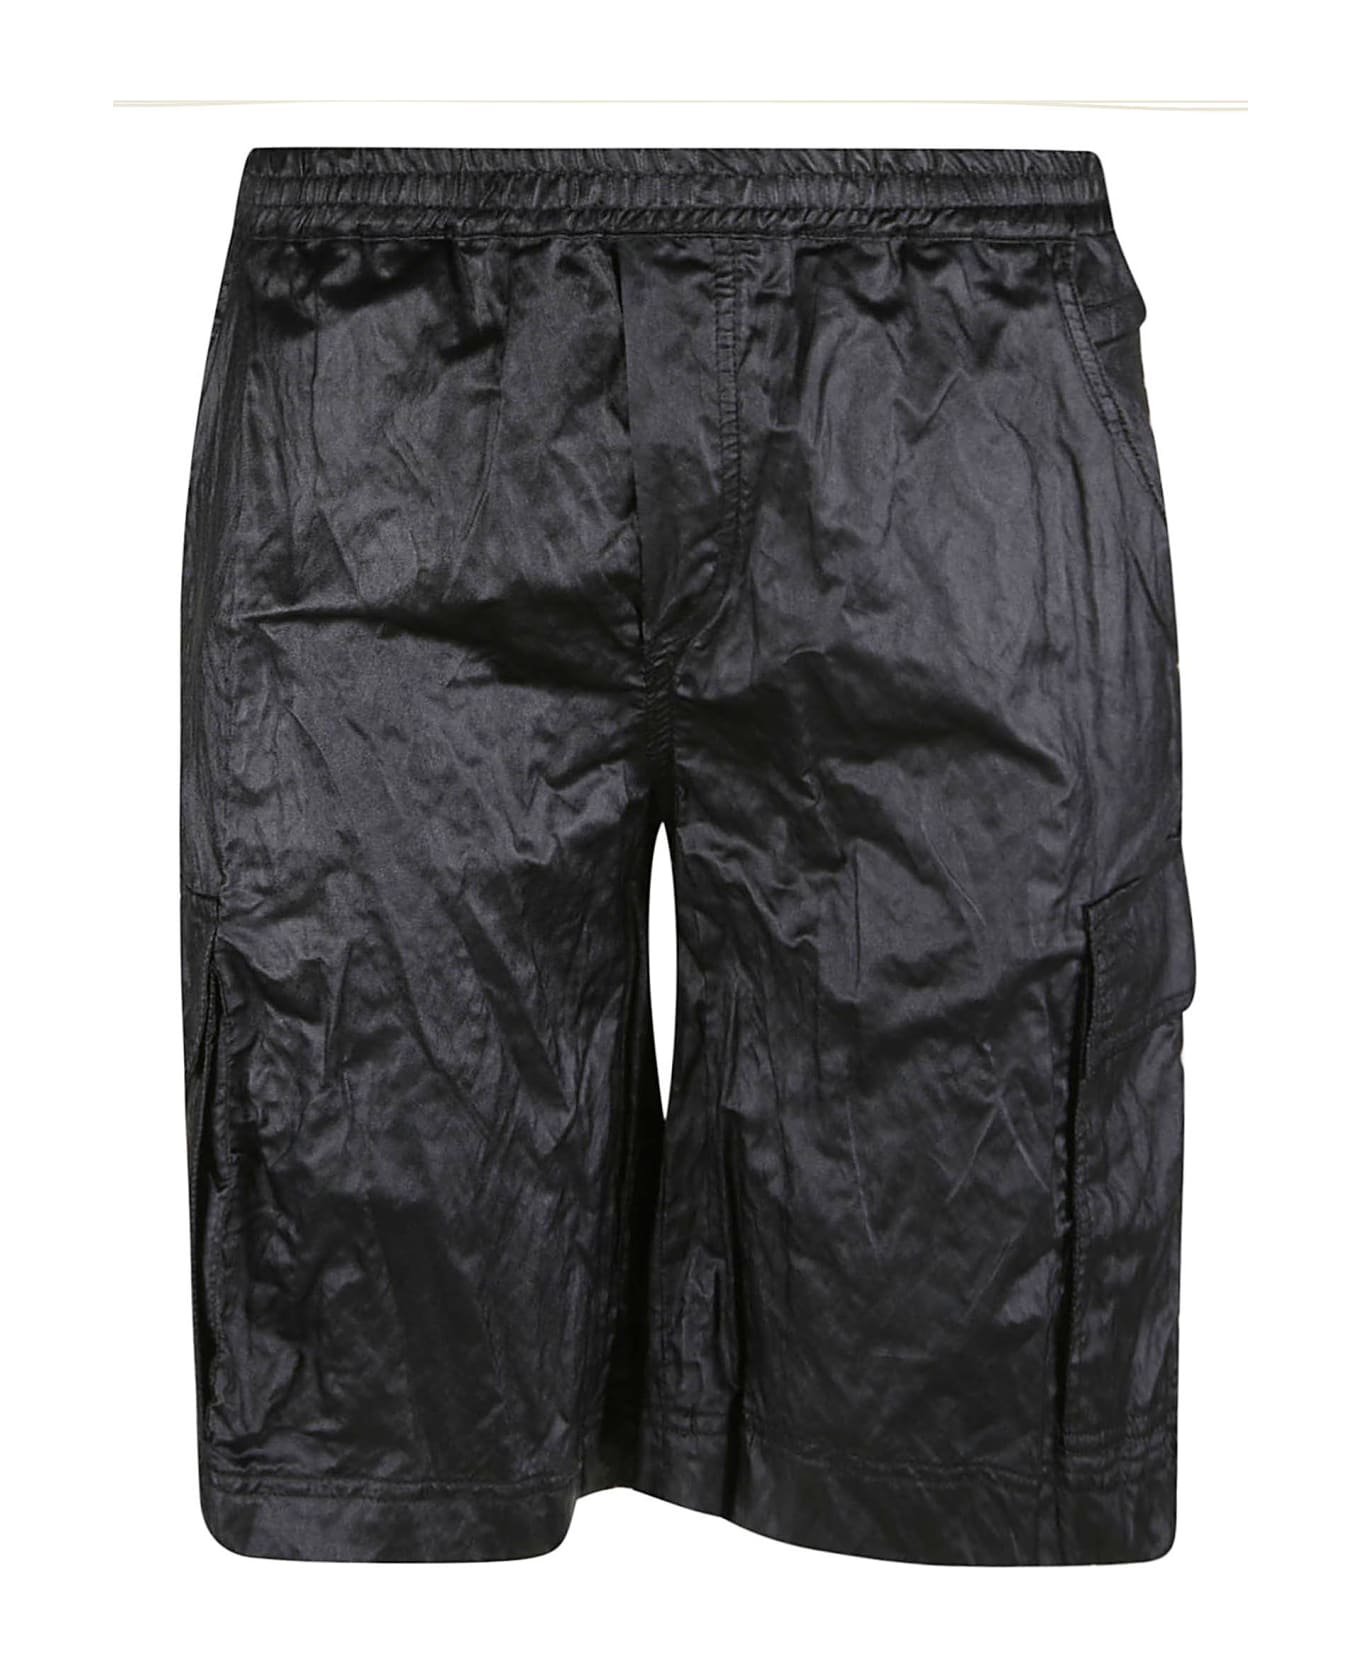 44 Label Group Cargo Ribbed Shorts - Black